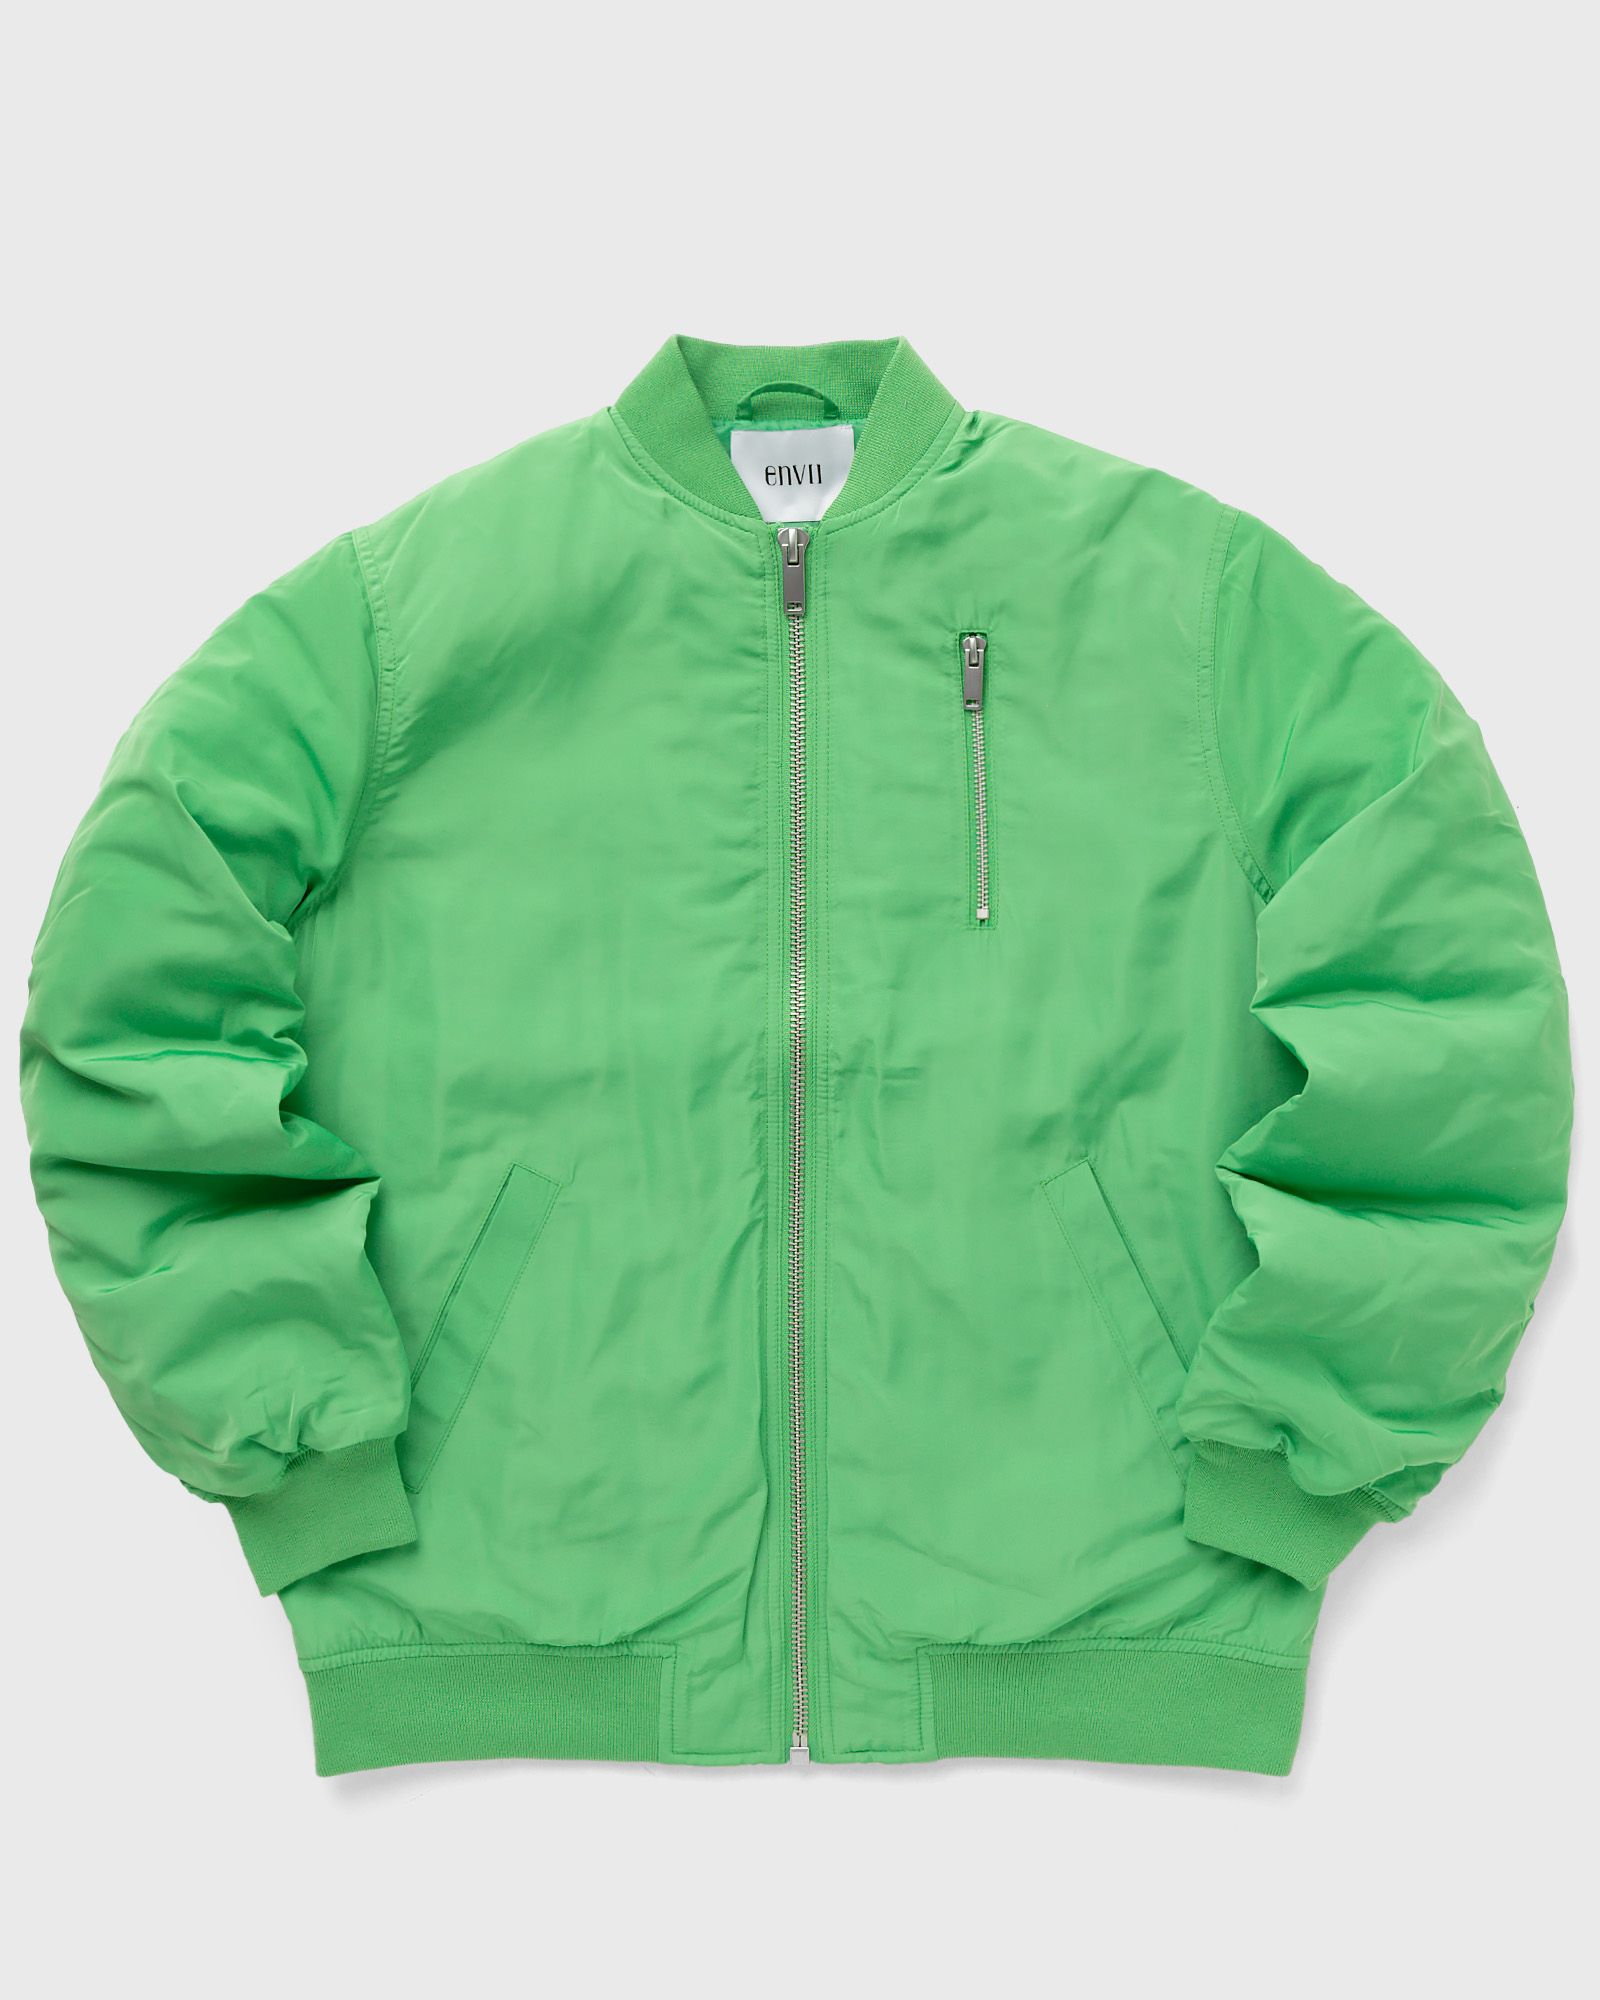 Envii - enrunner jacket 7015 women bomber jackets green in größe:s/m